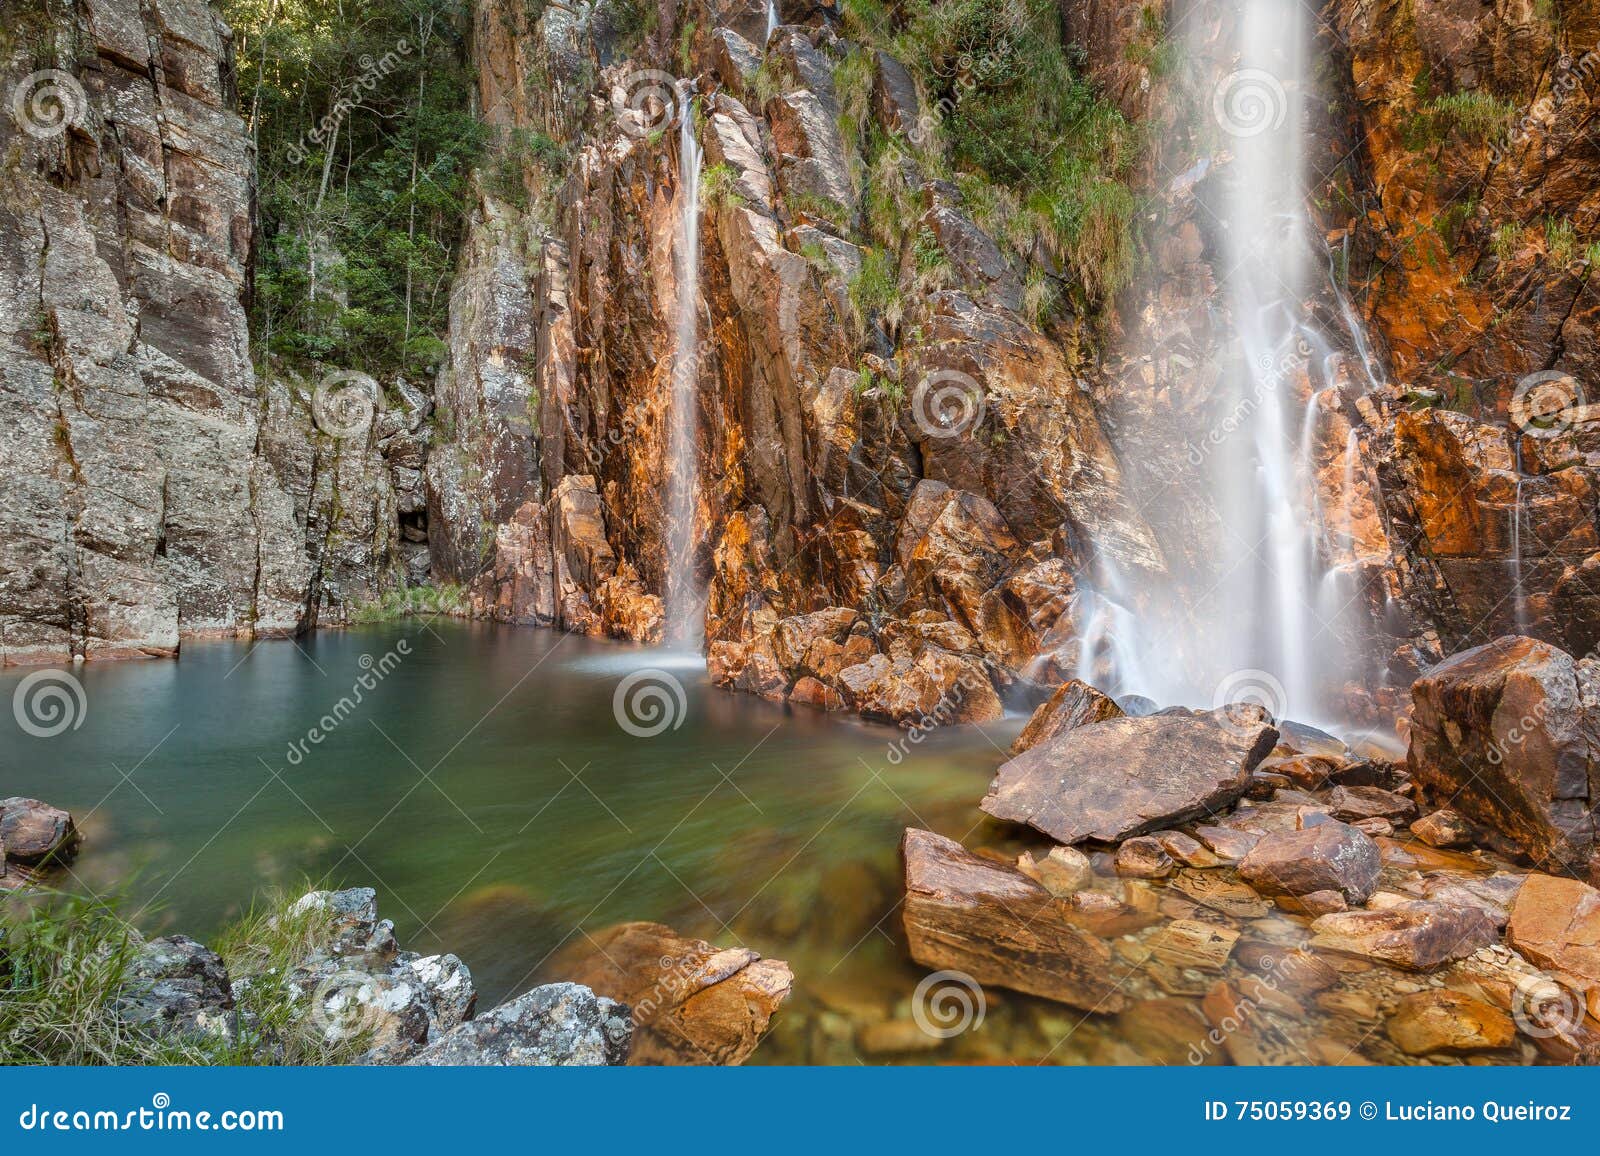 parida waterfall (cachoeira da parida) - serra da canastra